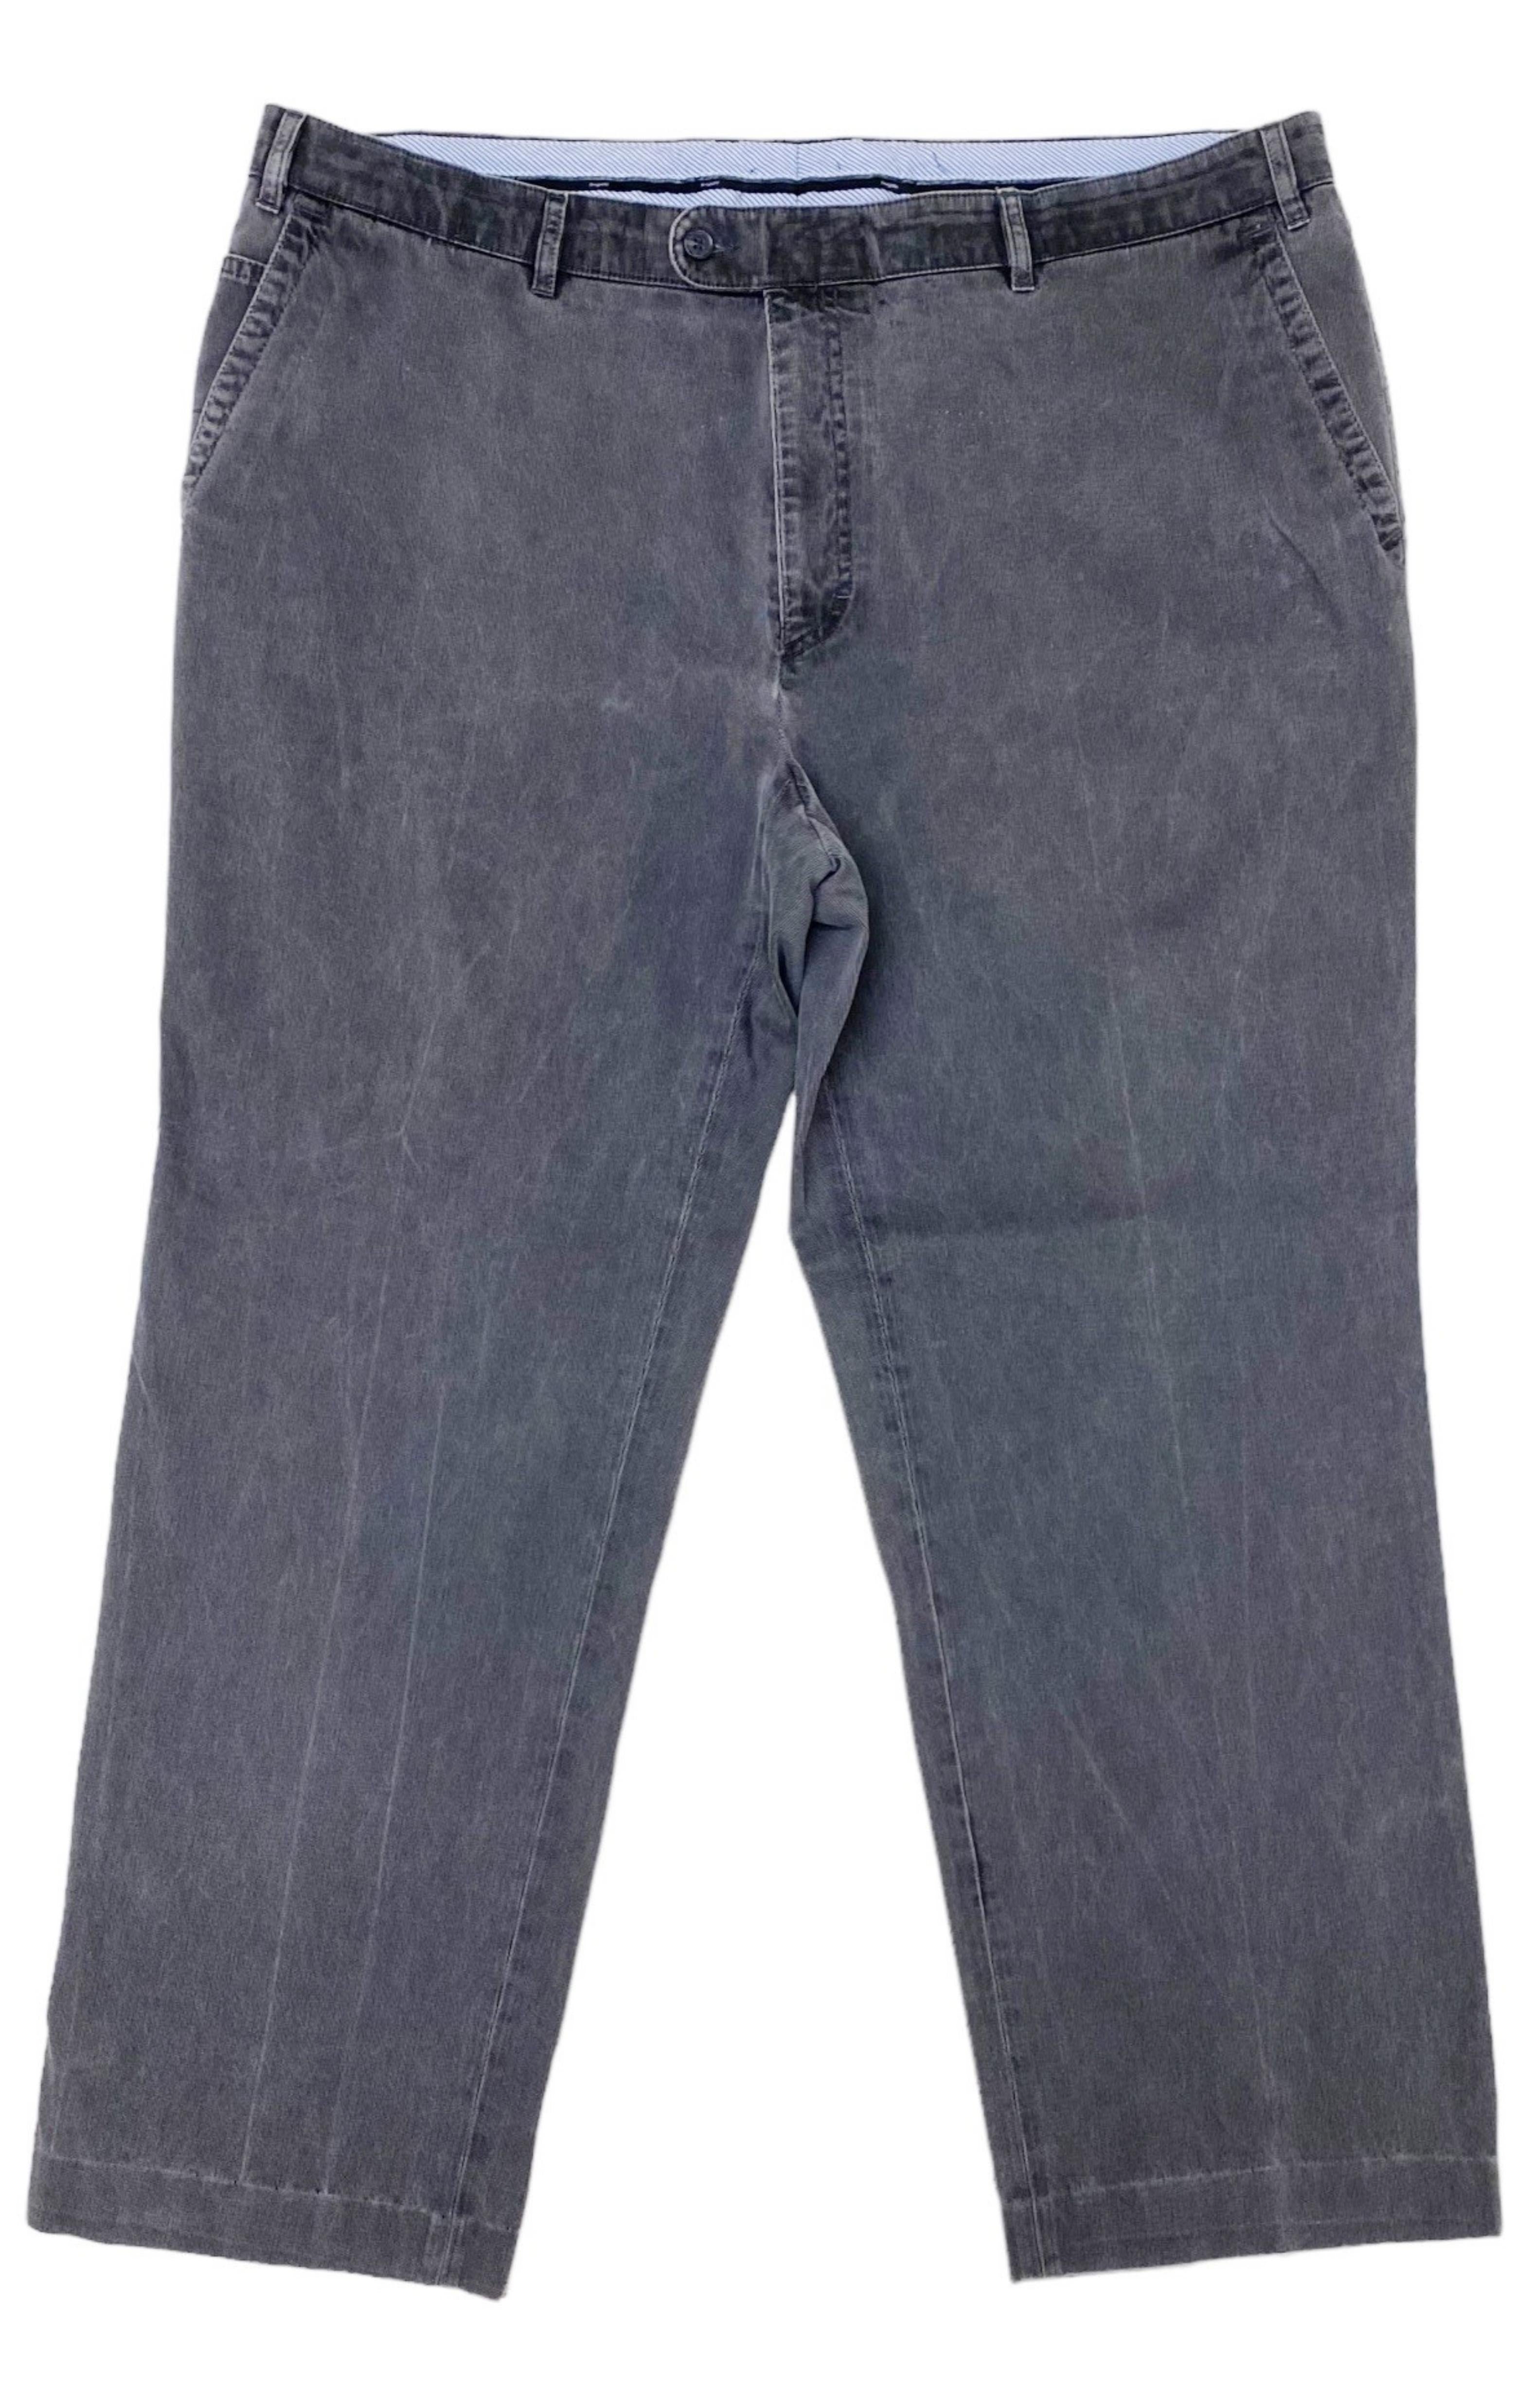 BUGATTI (RARE) Pants Size: EUR 60 / Fits like 3XL